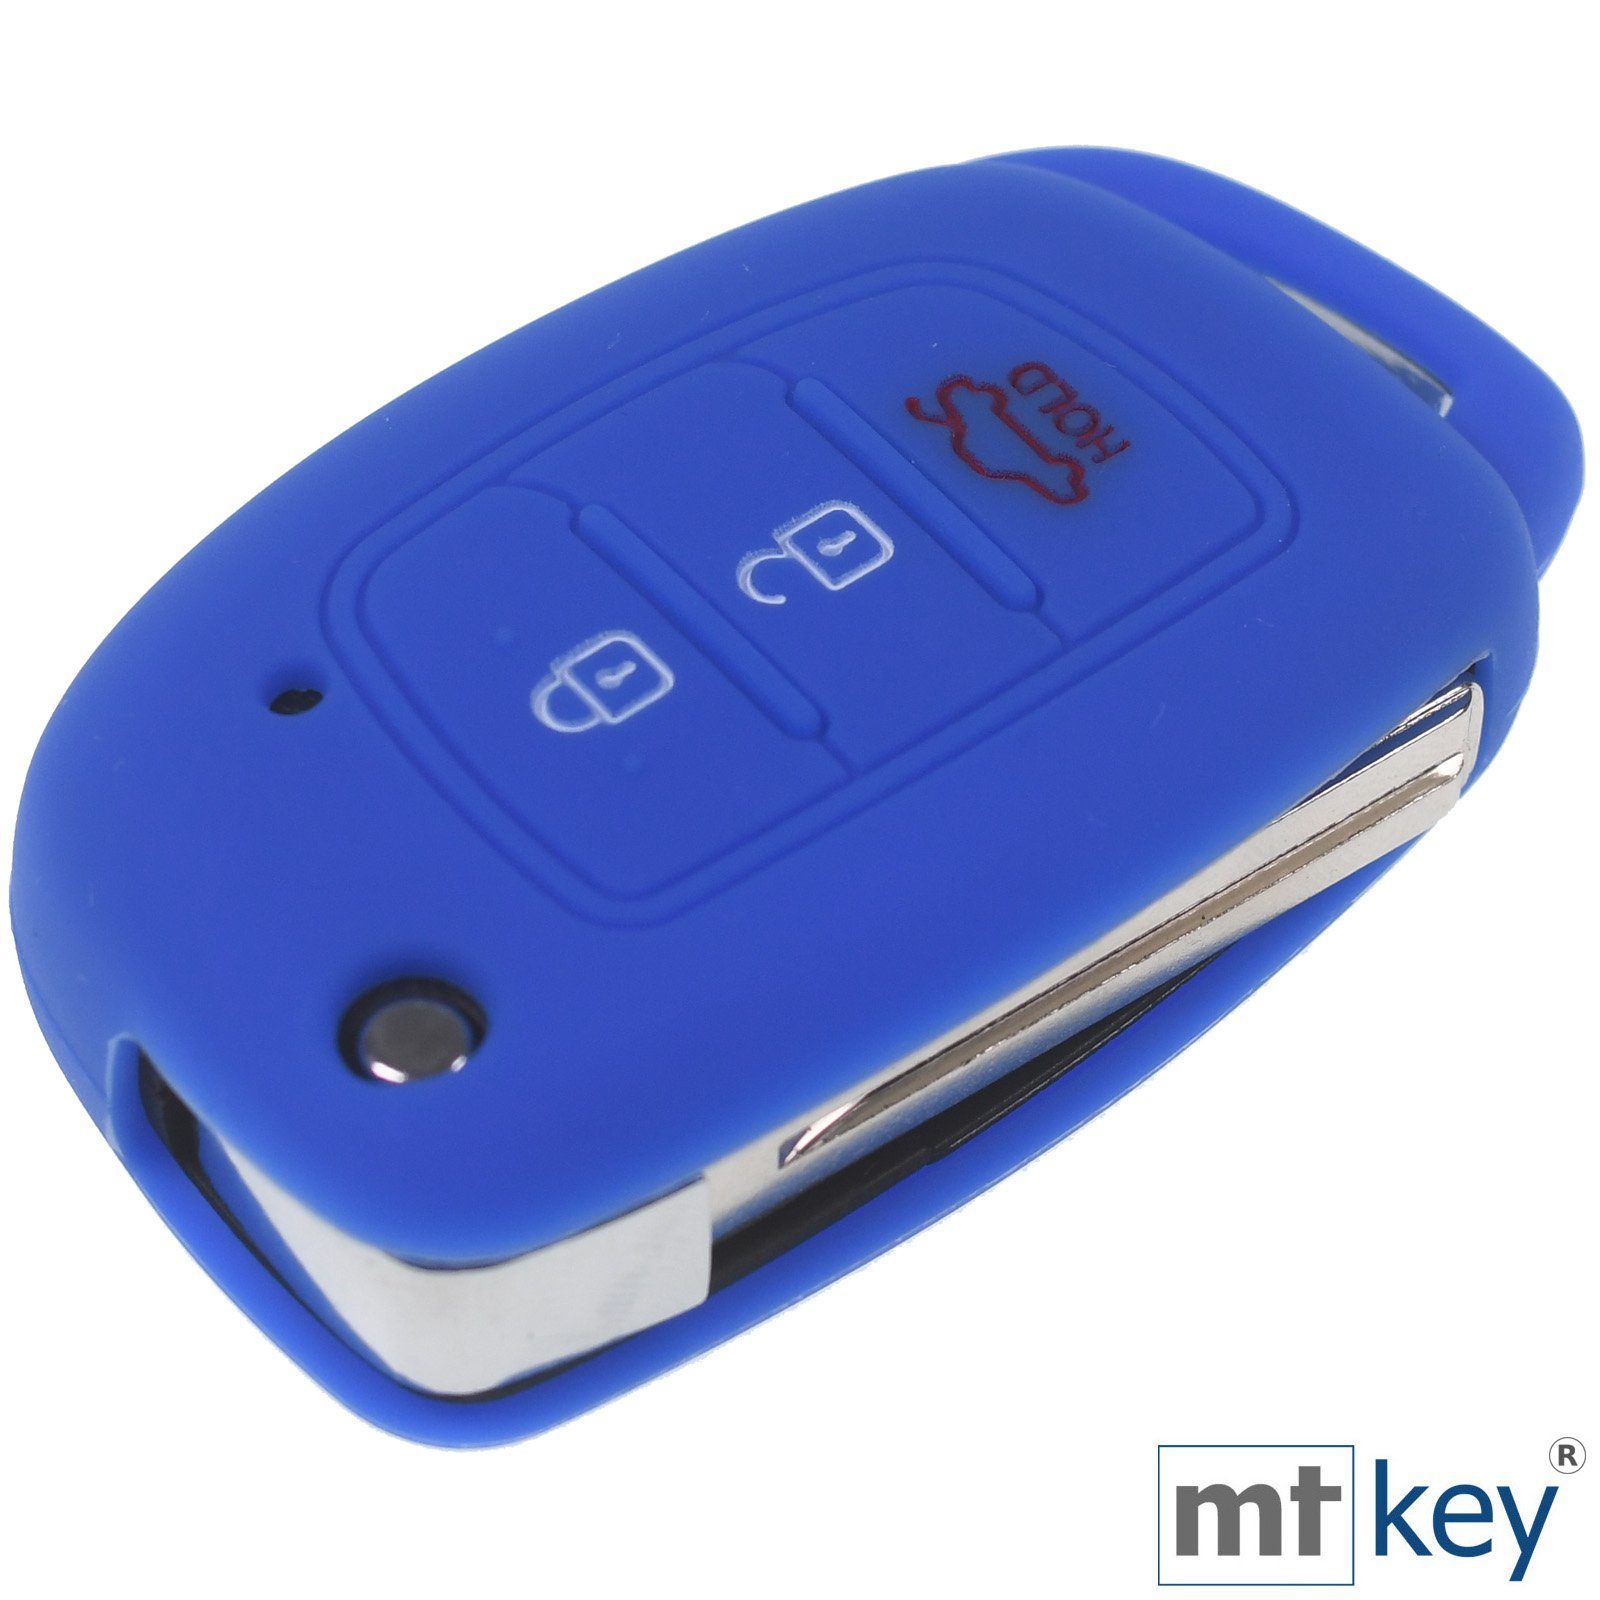 Klappschlüssel Tucson Schlüsseltasche Autoschlüssel im Design i10 i20 Accent Schutzhülle i40 Hyundai ix25 Silikon Knopf + für Wabe ix35 Blau 3 mt-key Schlüsselband,